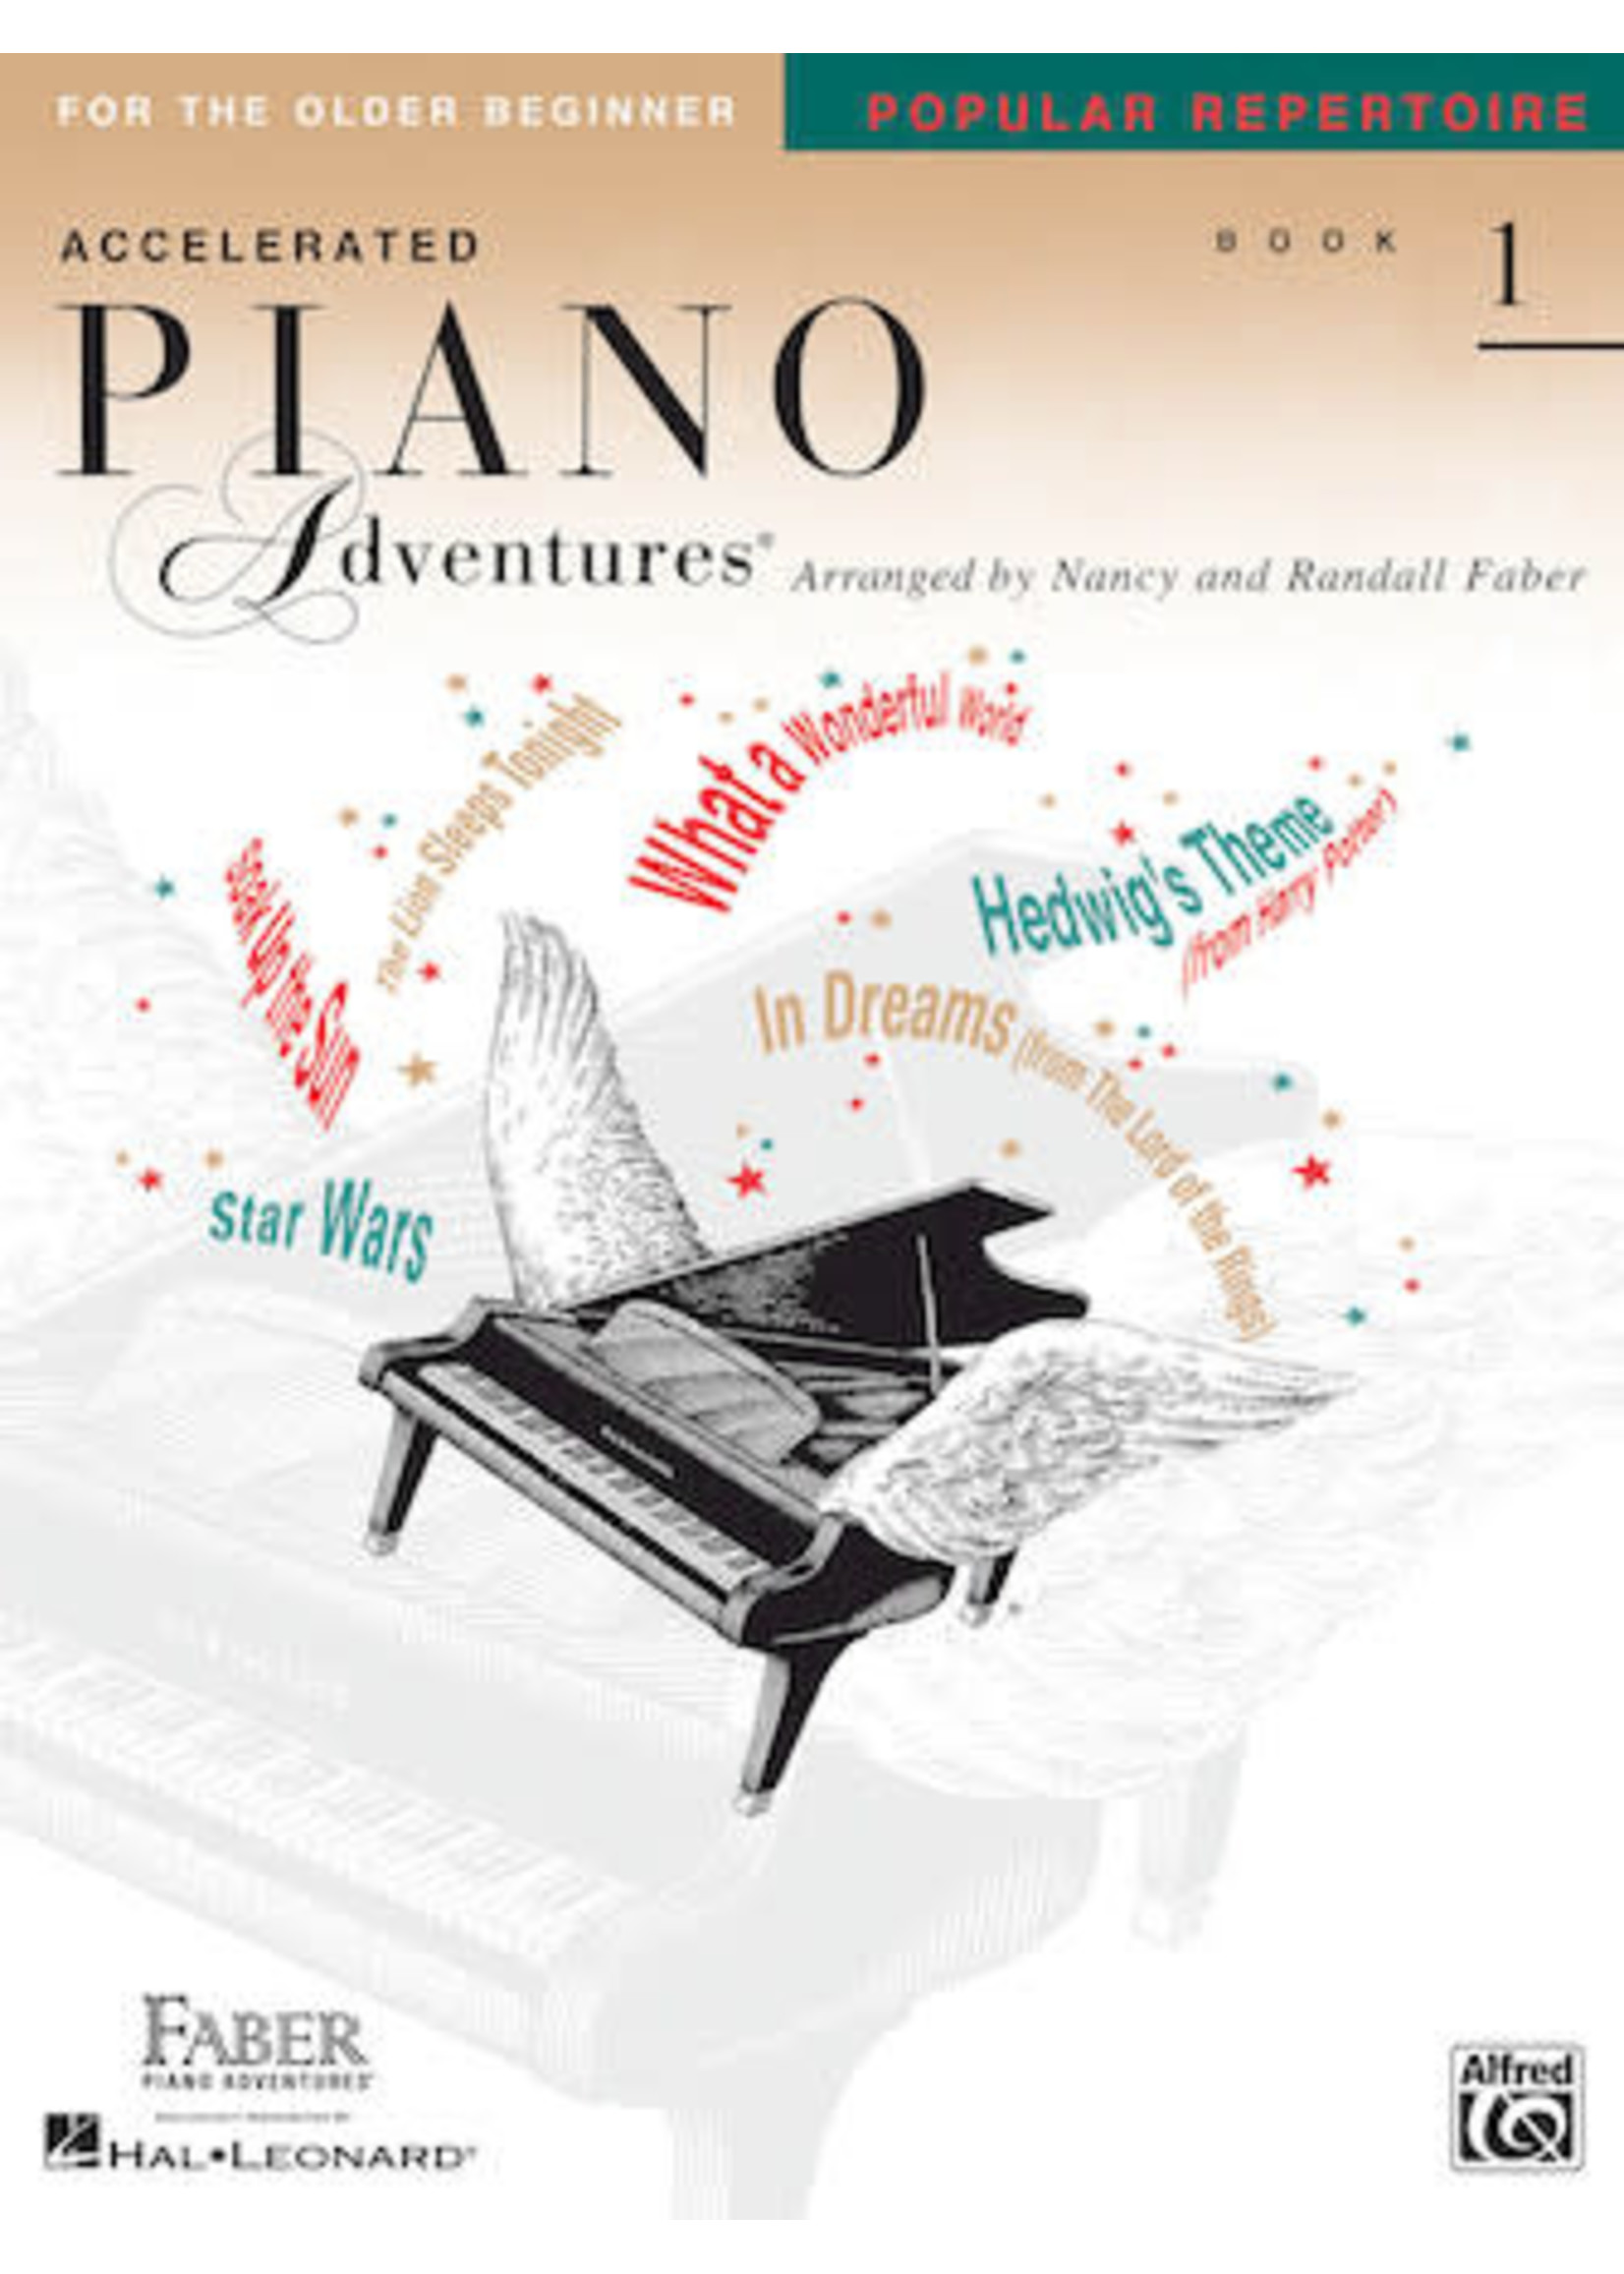 Hal Leonard Faber Accelerated Piano Adventures for the Older Beginner Popular Repertoire 1